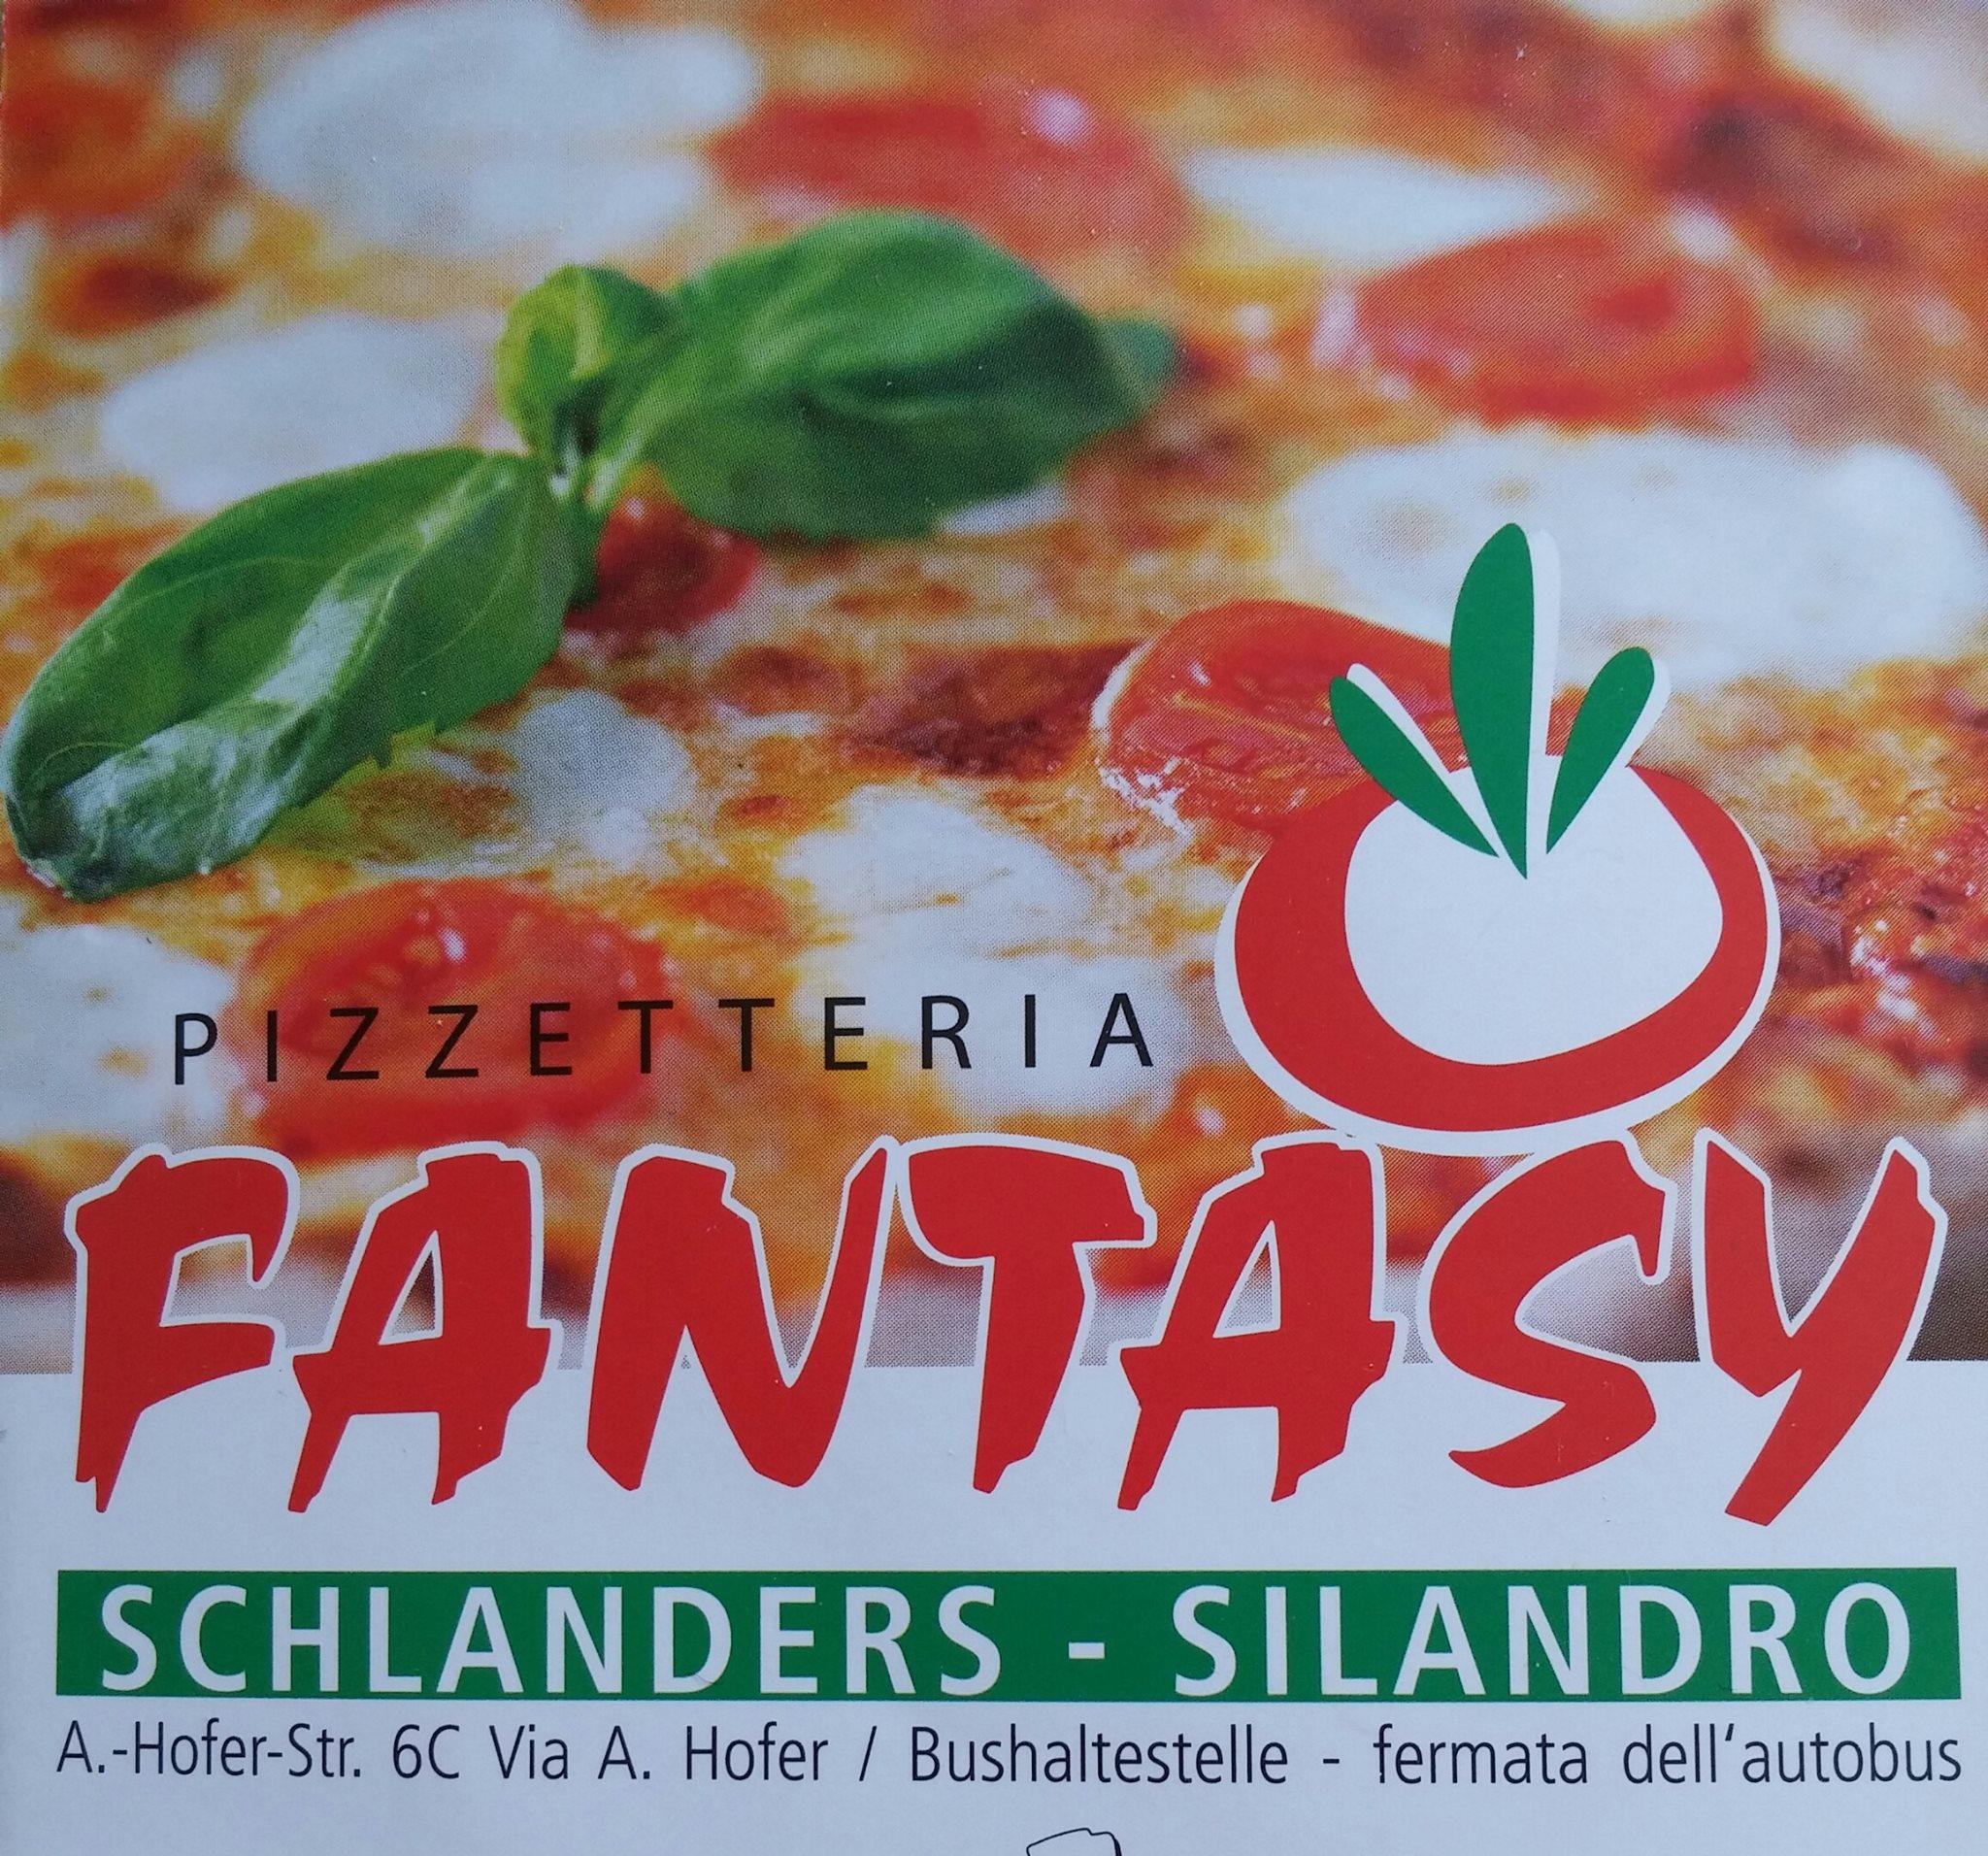 Pizzetteria Fantasy